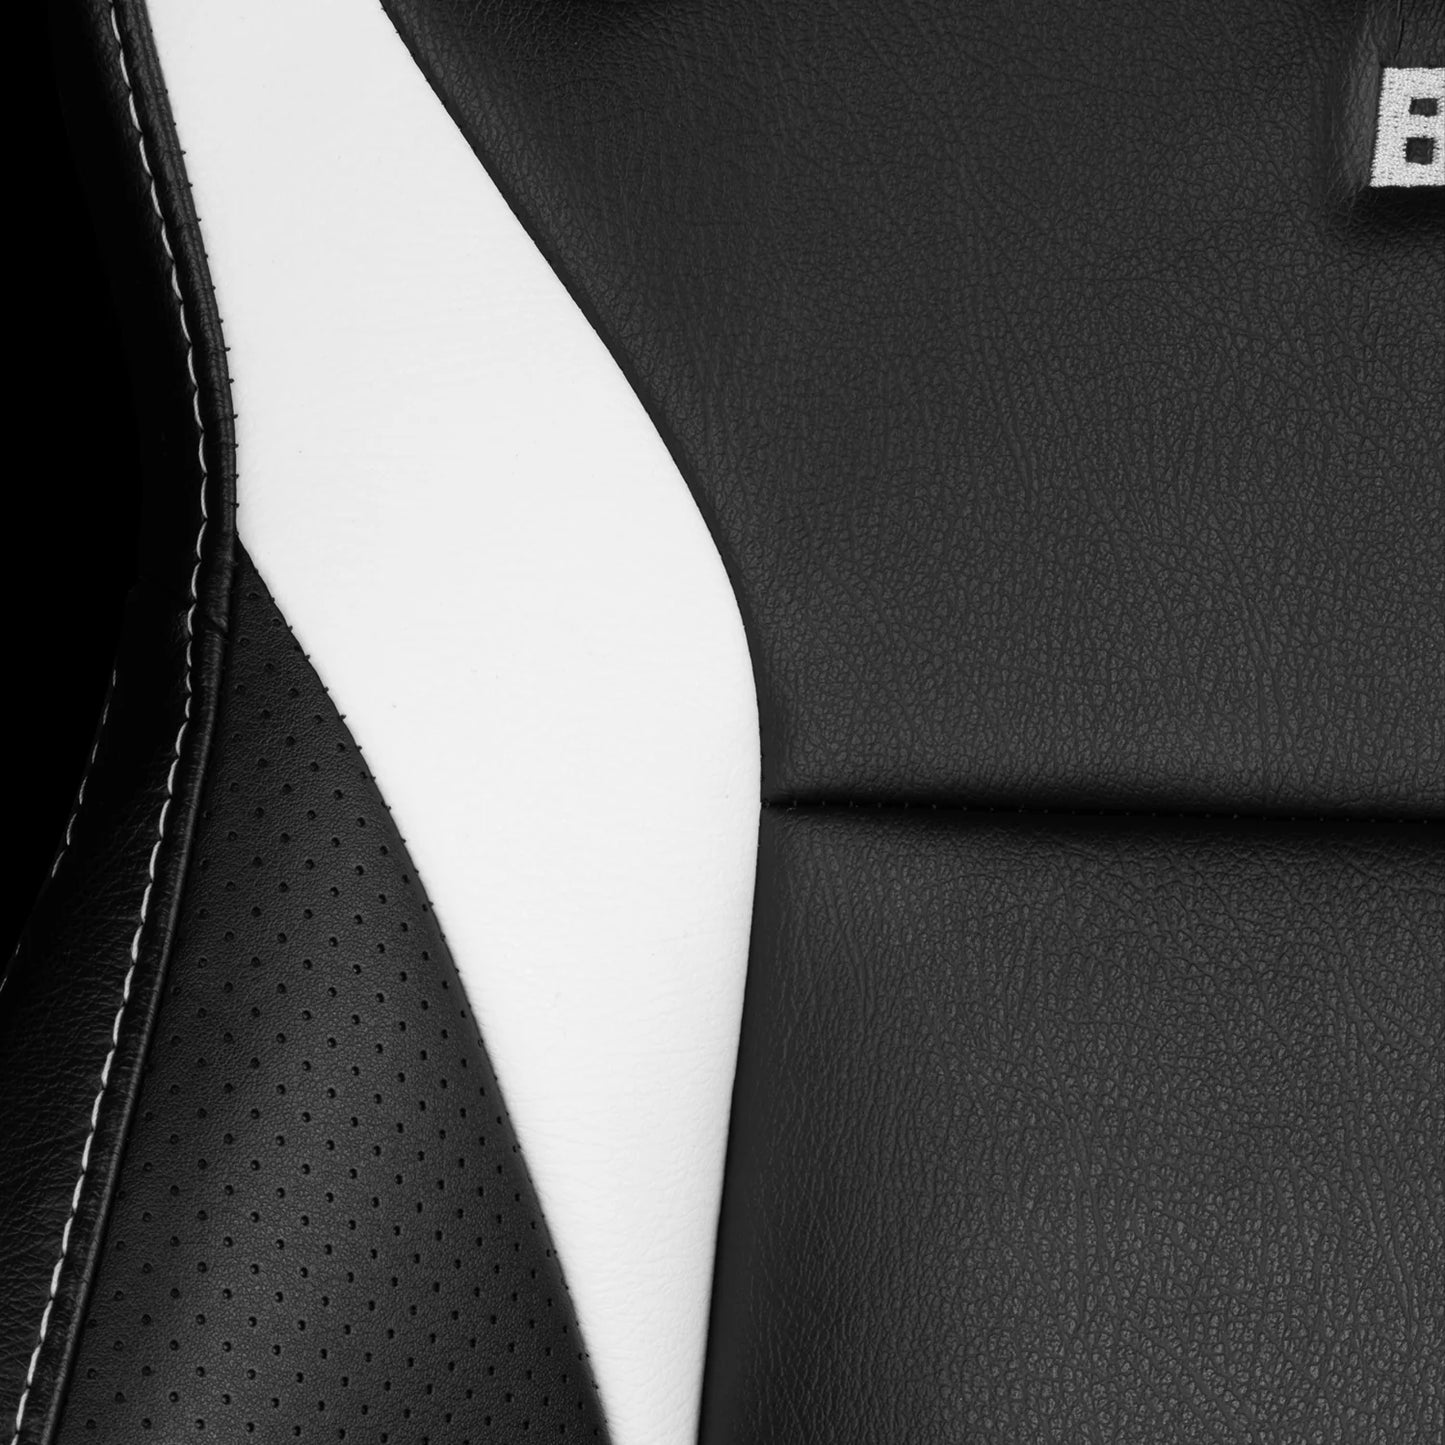 BRAUM ELITE V2 Series Sport Reclinable Seats (Black | White Leatherette) – Priced Per Pair